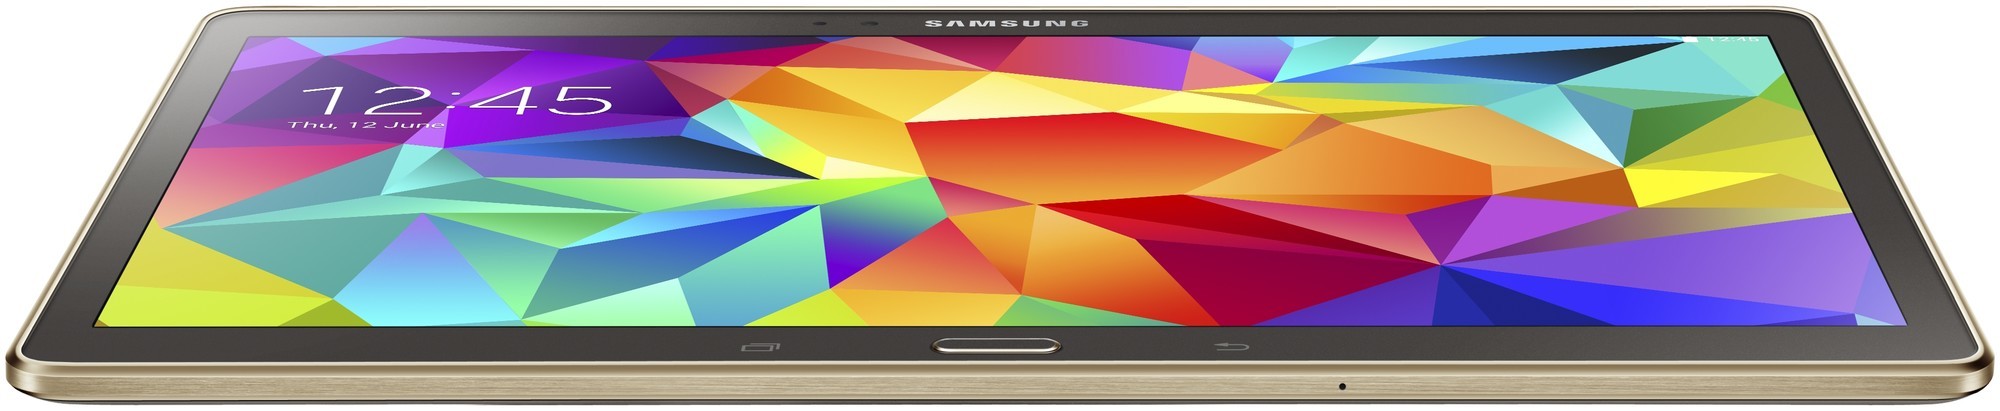 SAMSUNG GALAXY TAB S T805 3gb 32gb Quad-Core 10.5 Fingerprint Android 4g  LTE